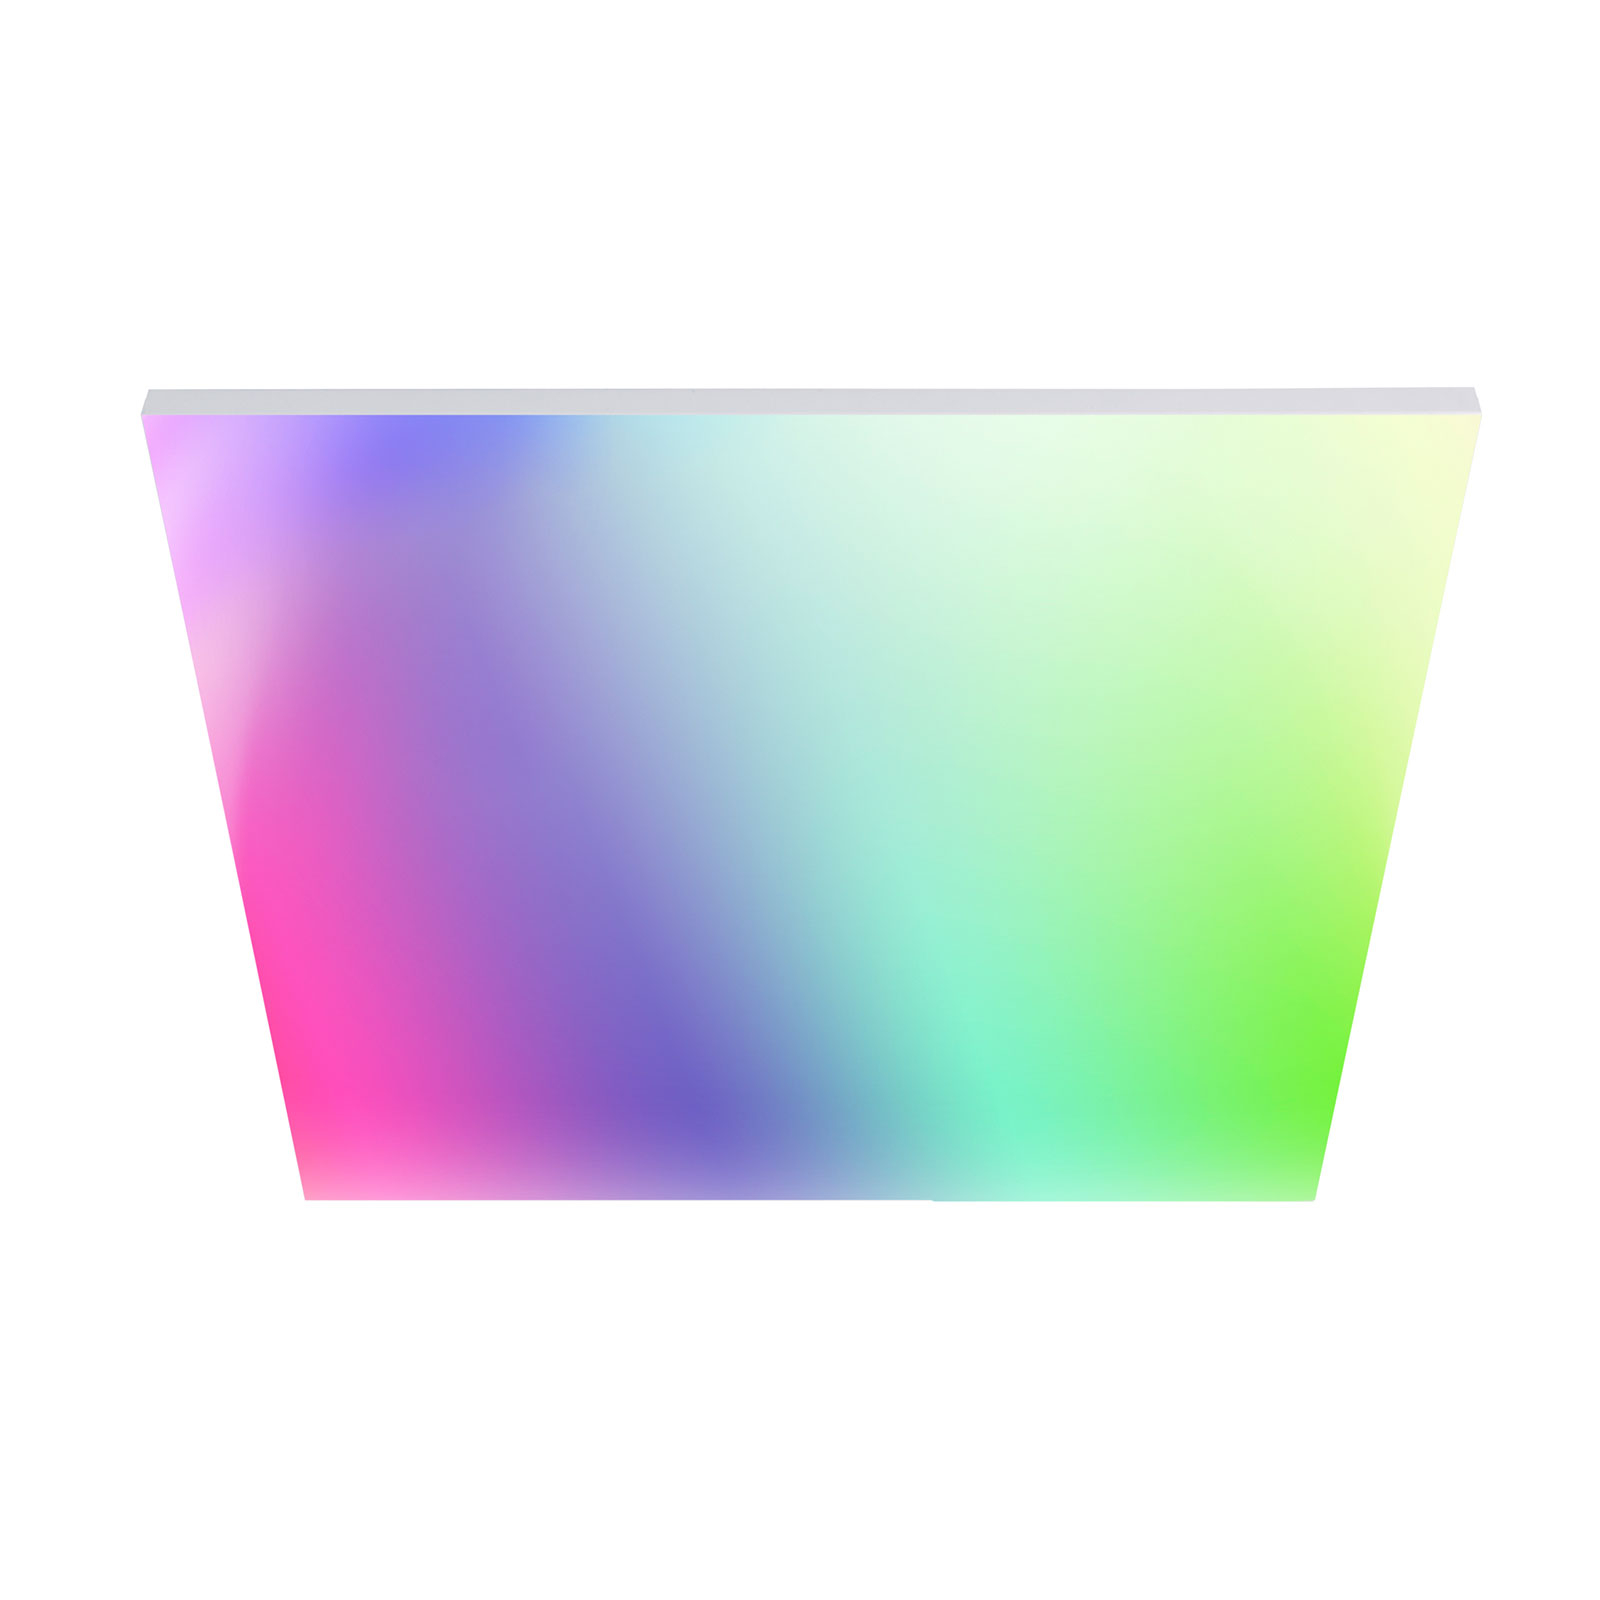 Müller Licht tint Aris LED-panel 60 x 60 cm RGBW